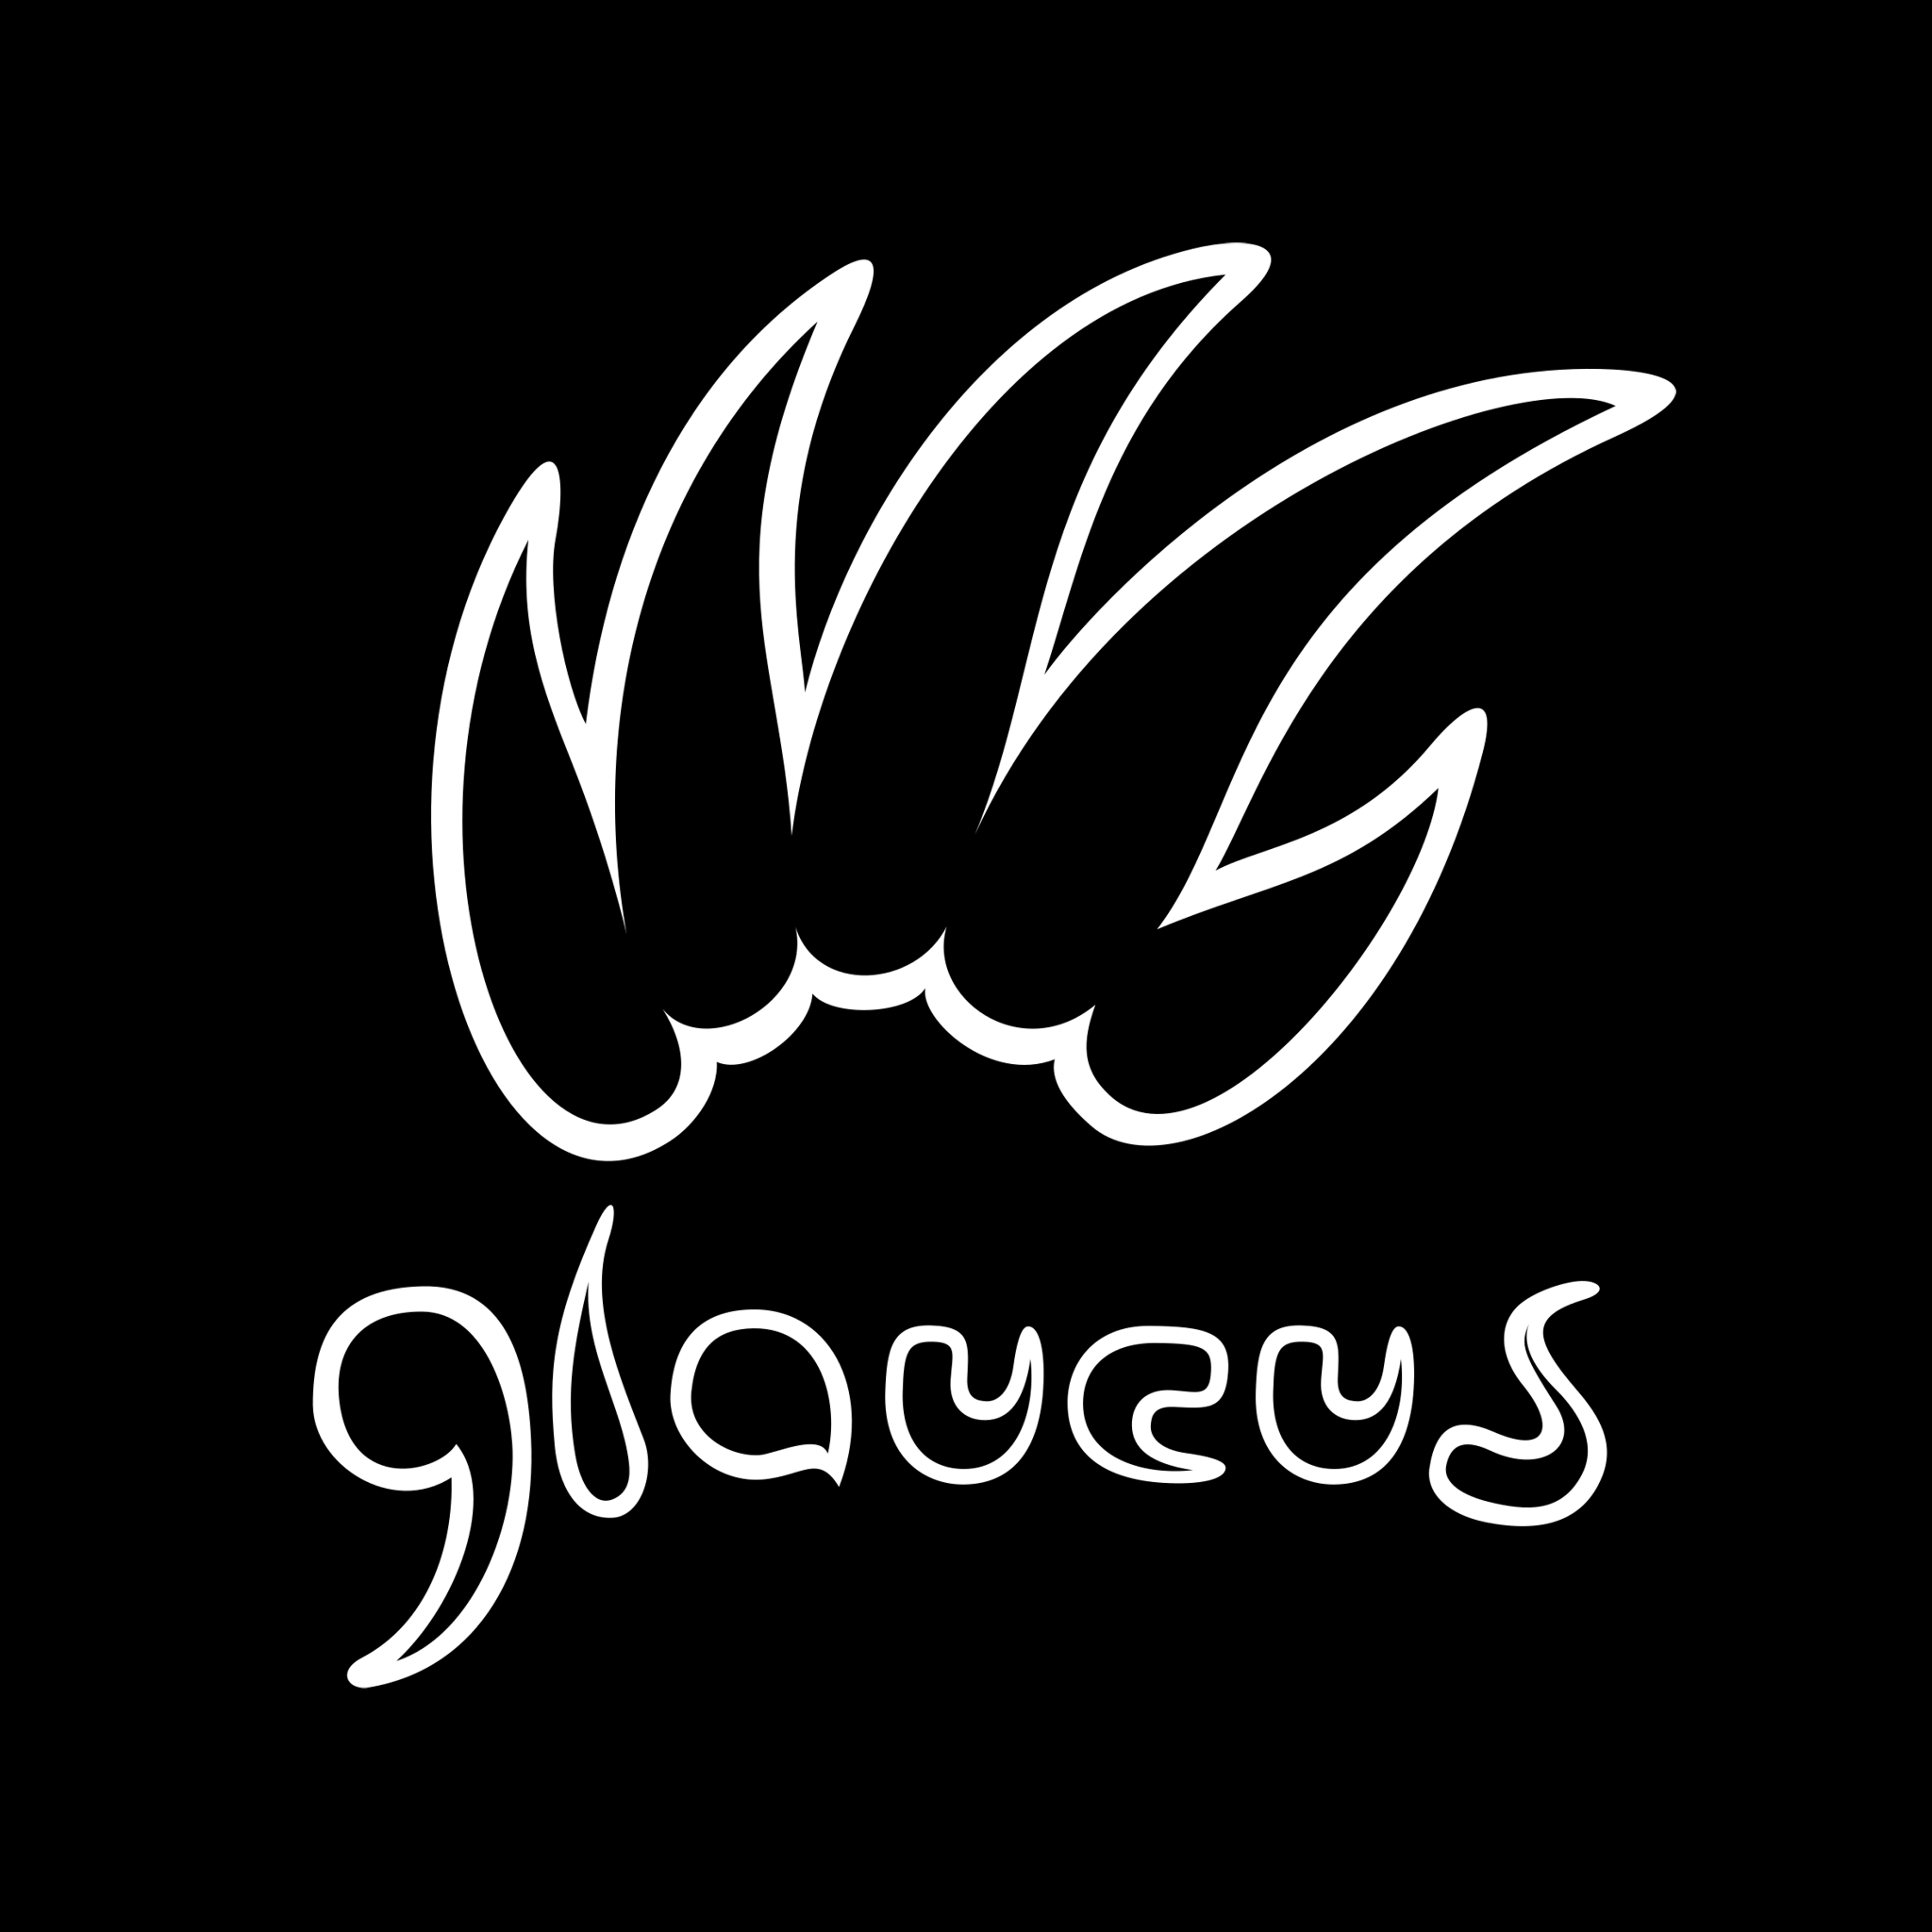 glaucus-logo-black-bg.png